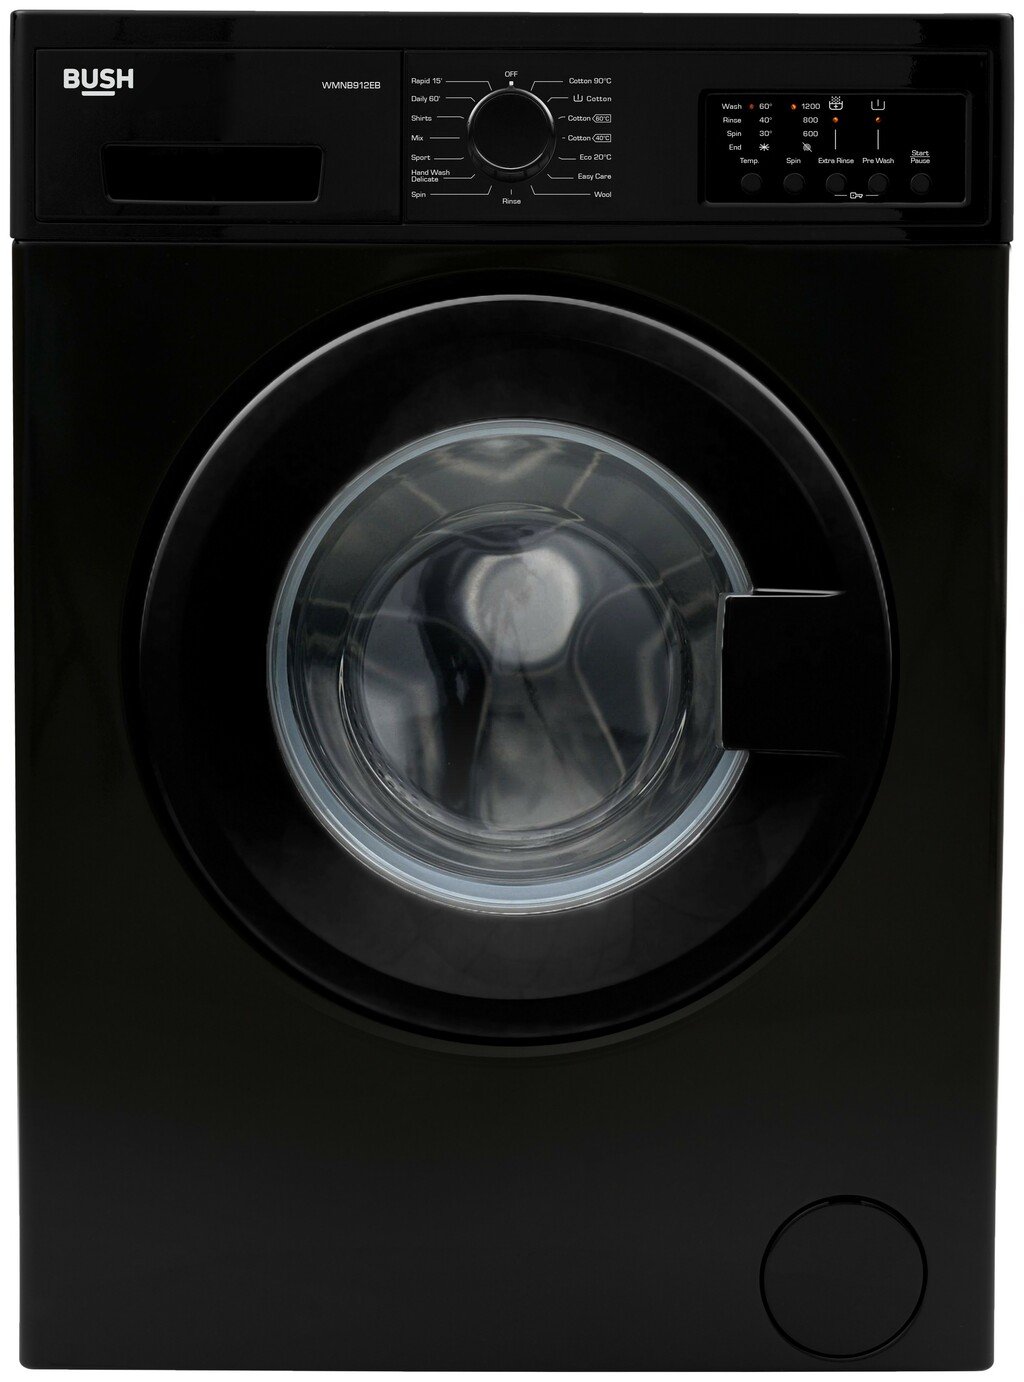 Bush WMNB912EB 9KG 1200 Spin Washing Machine - Black